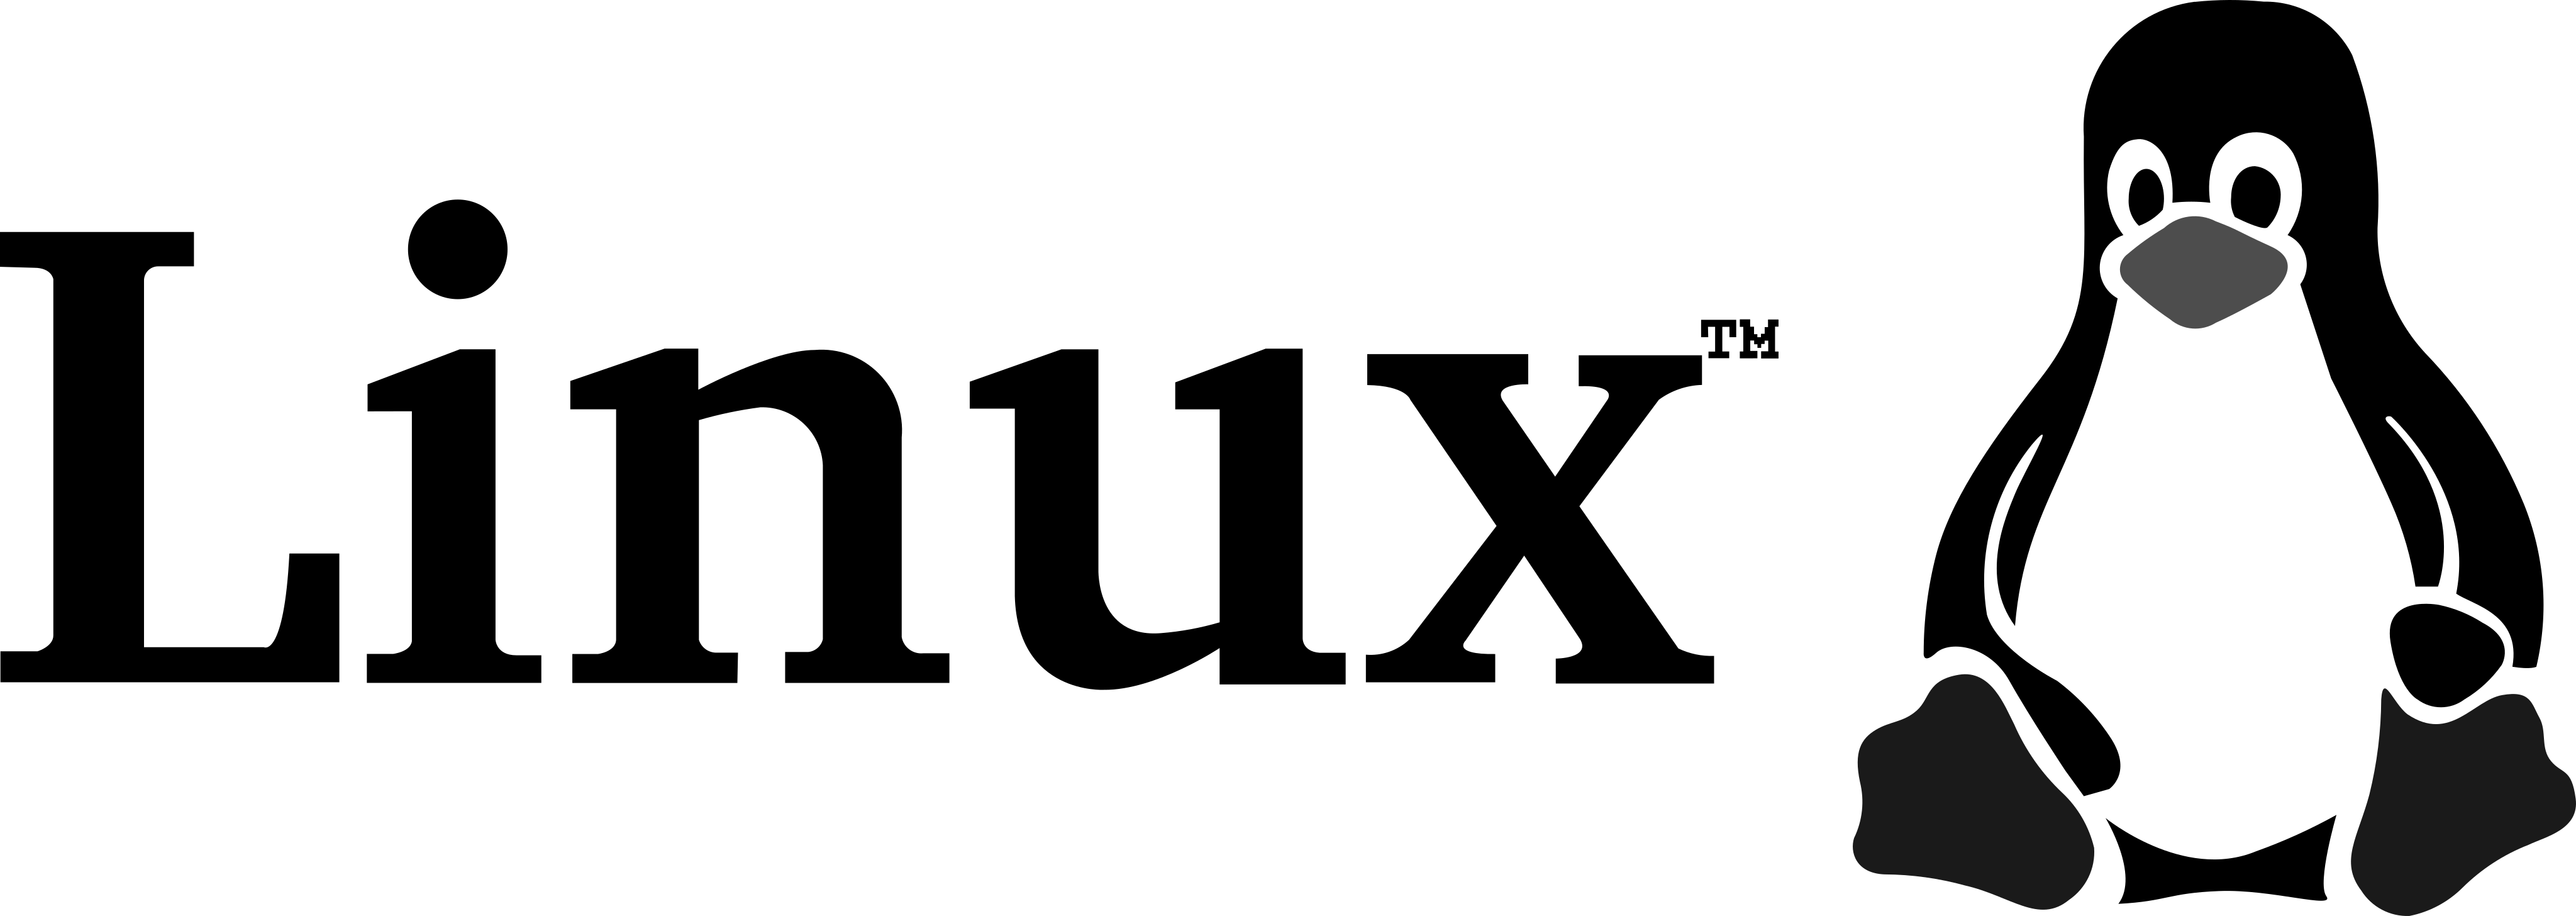 linux logo 1 - Linux Logo